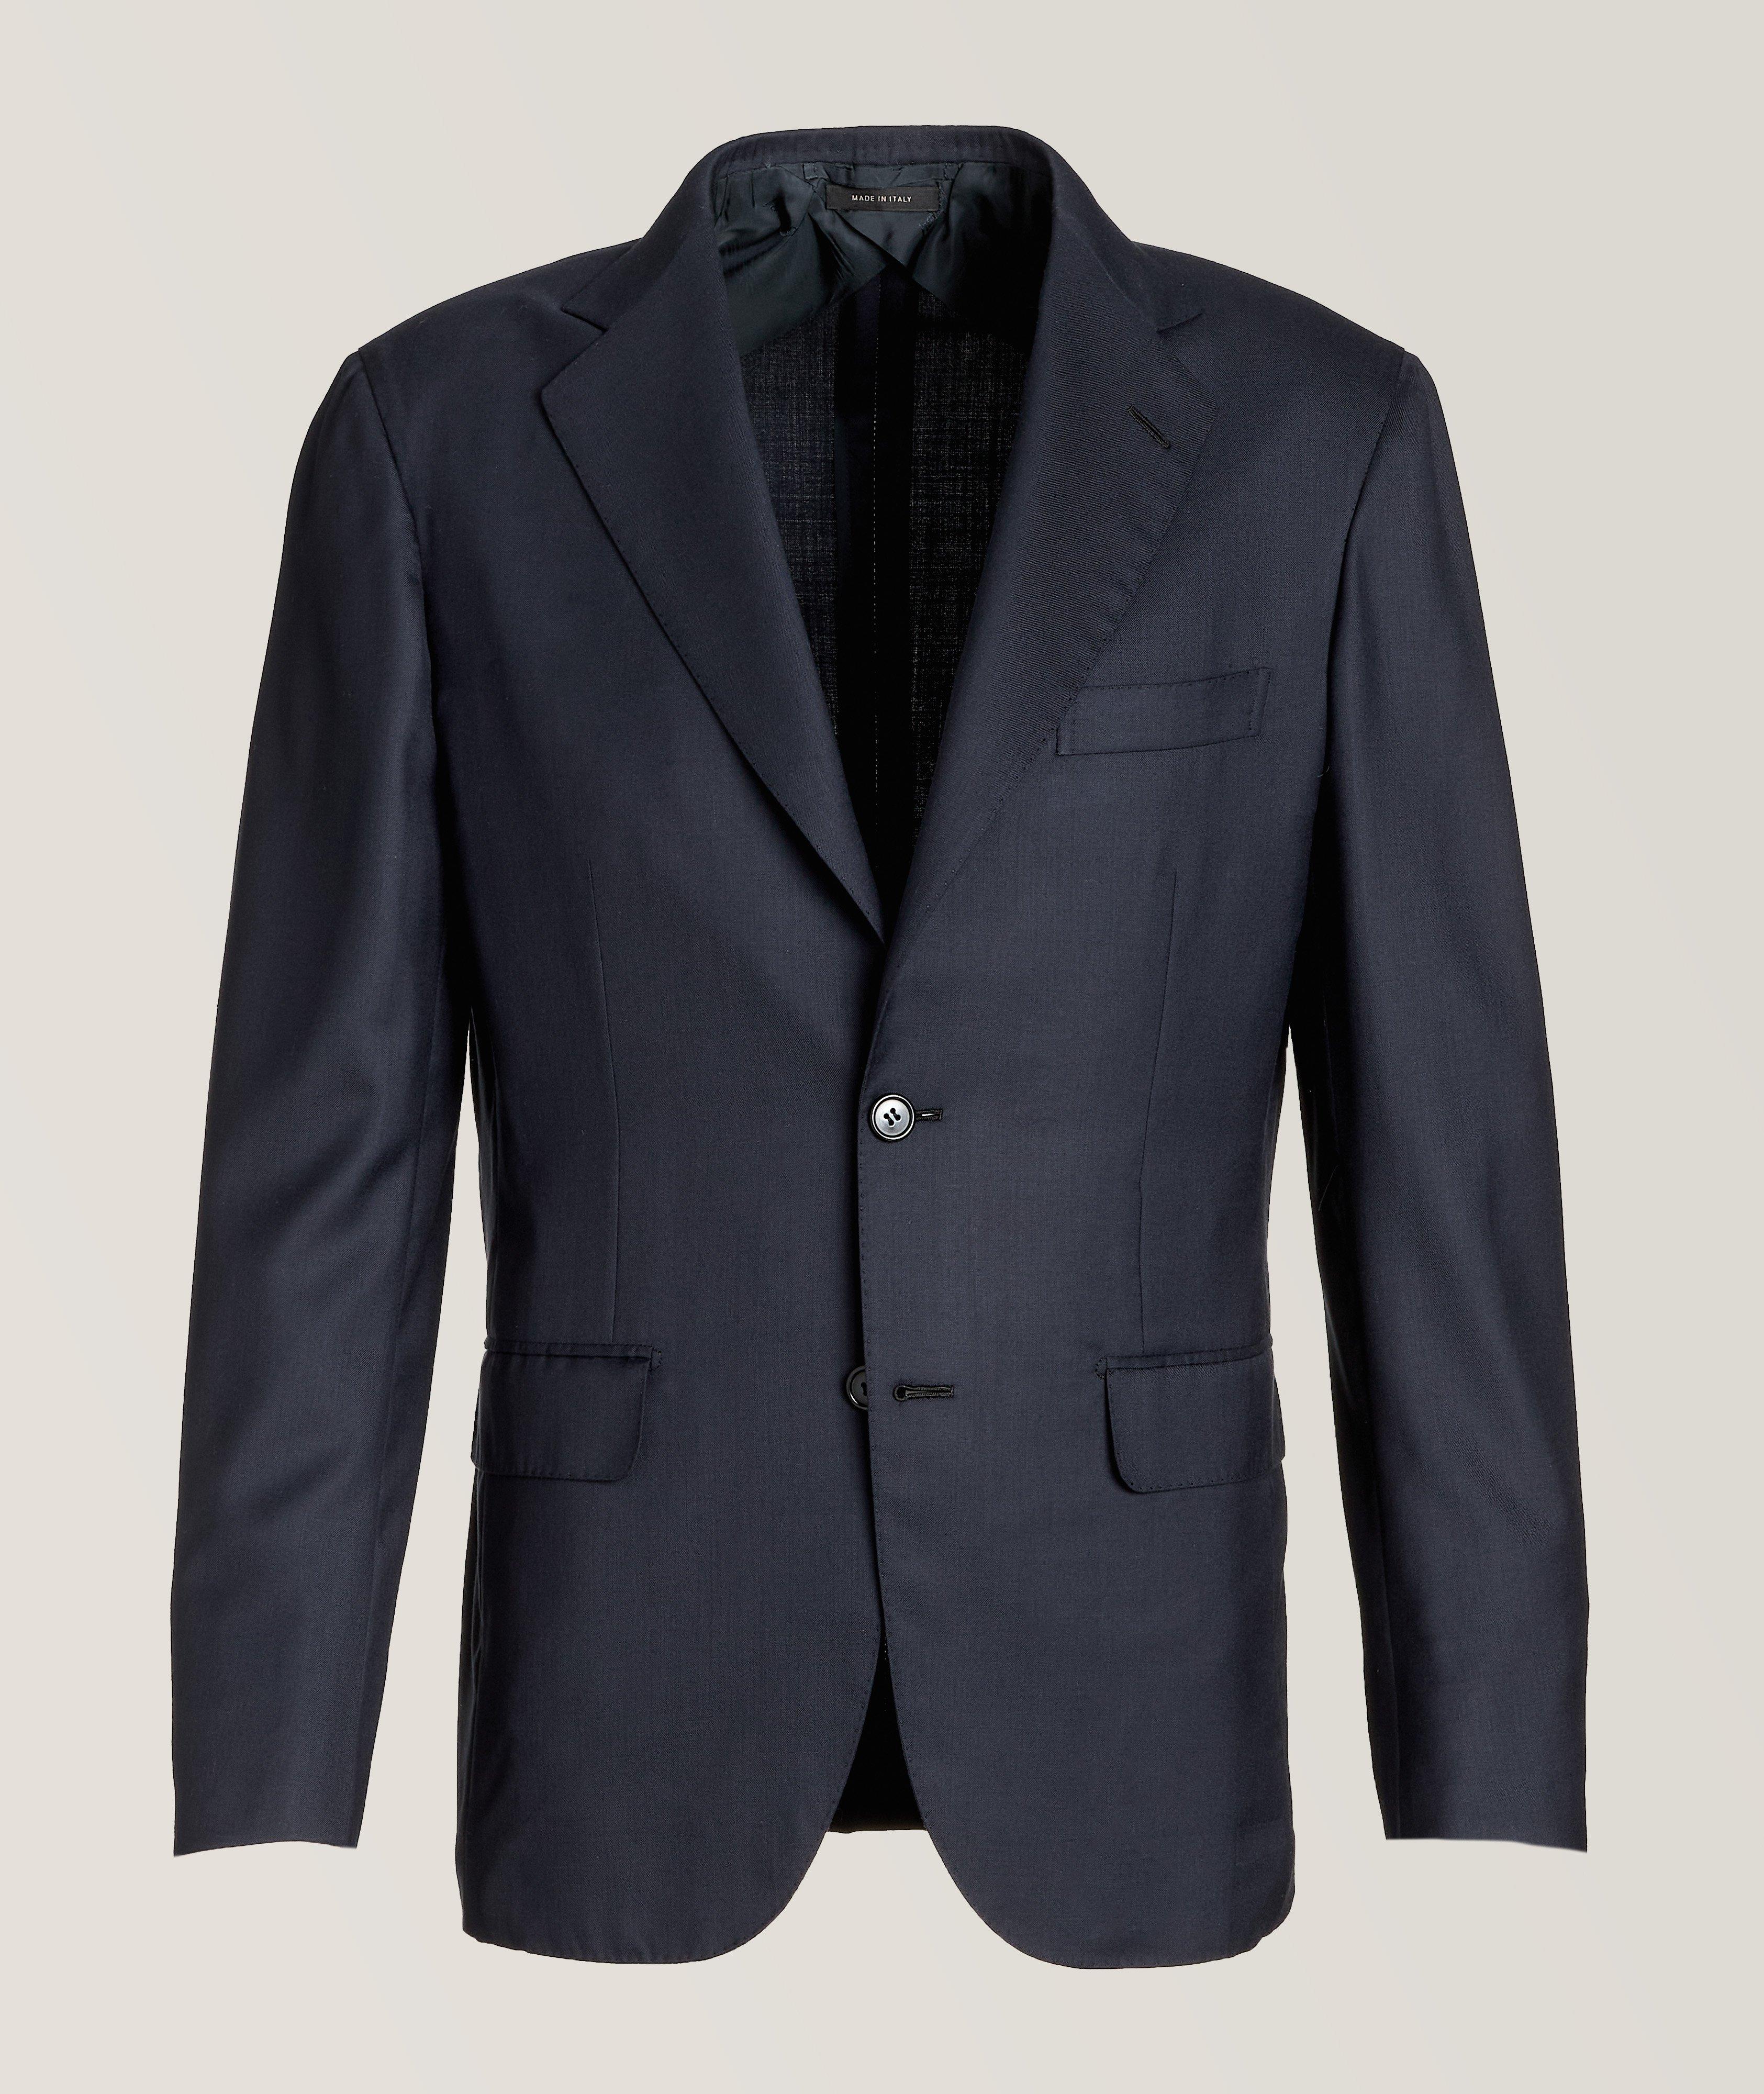 New Plume Textured Wool-Silk Sport Jacket image 0